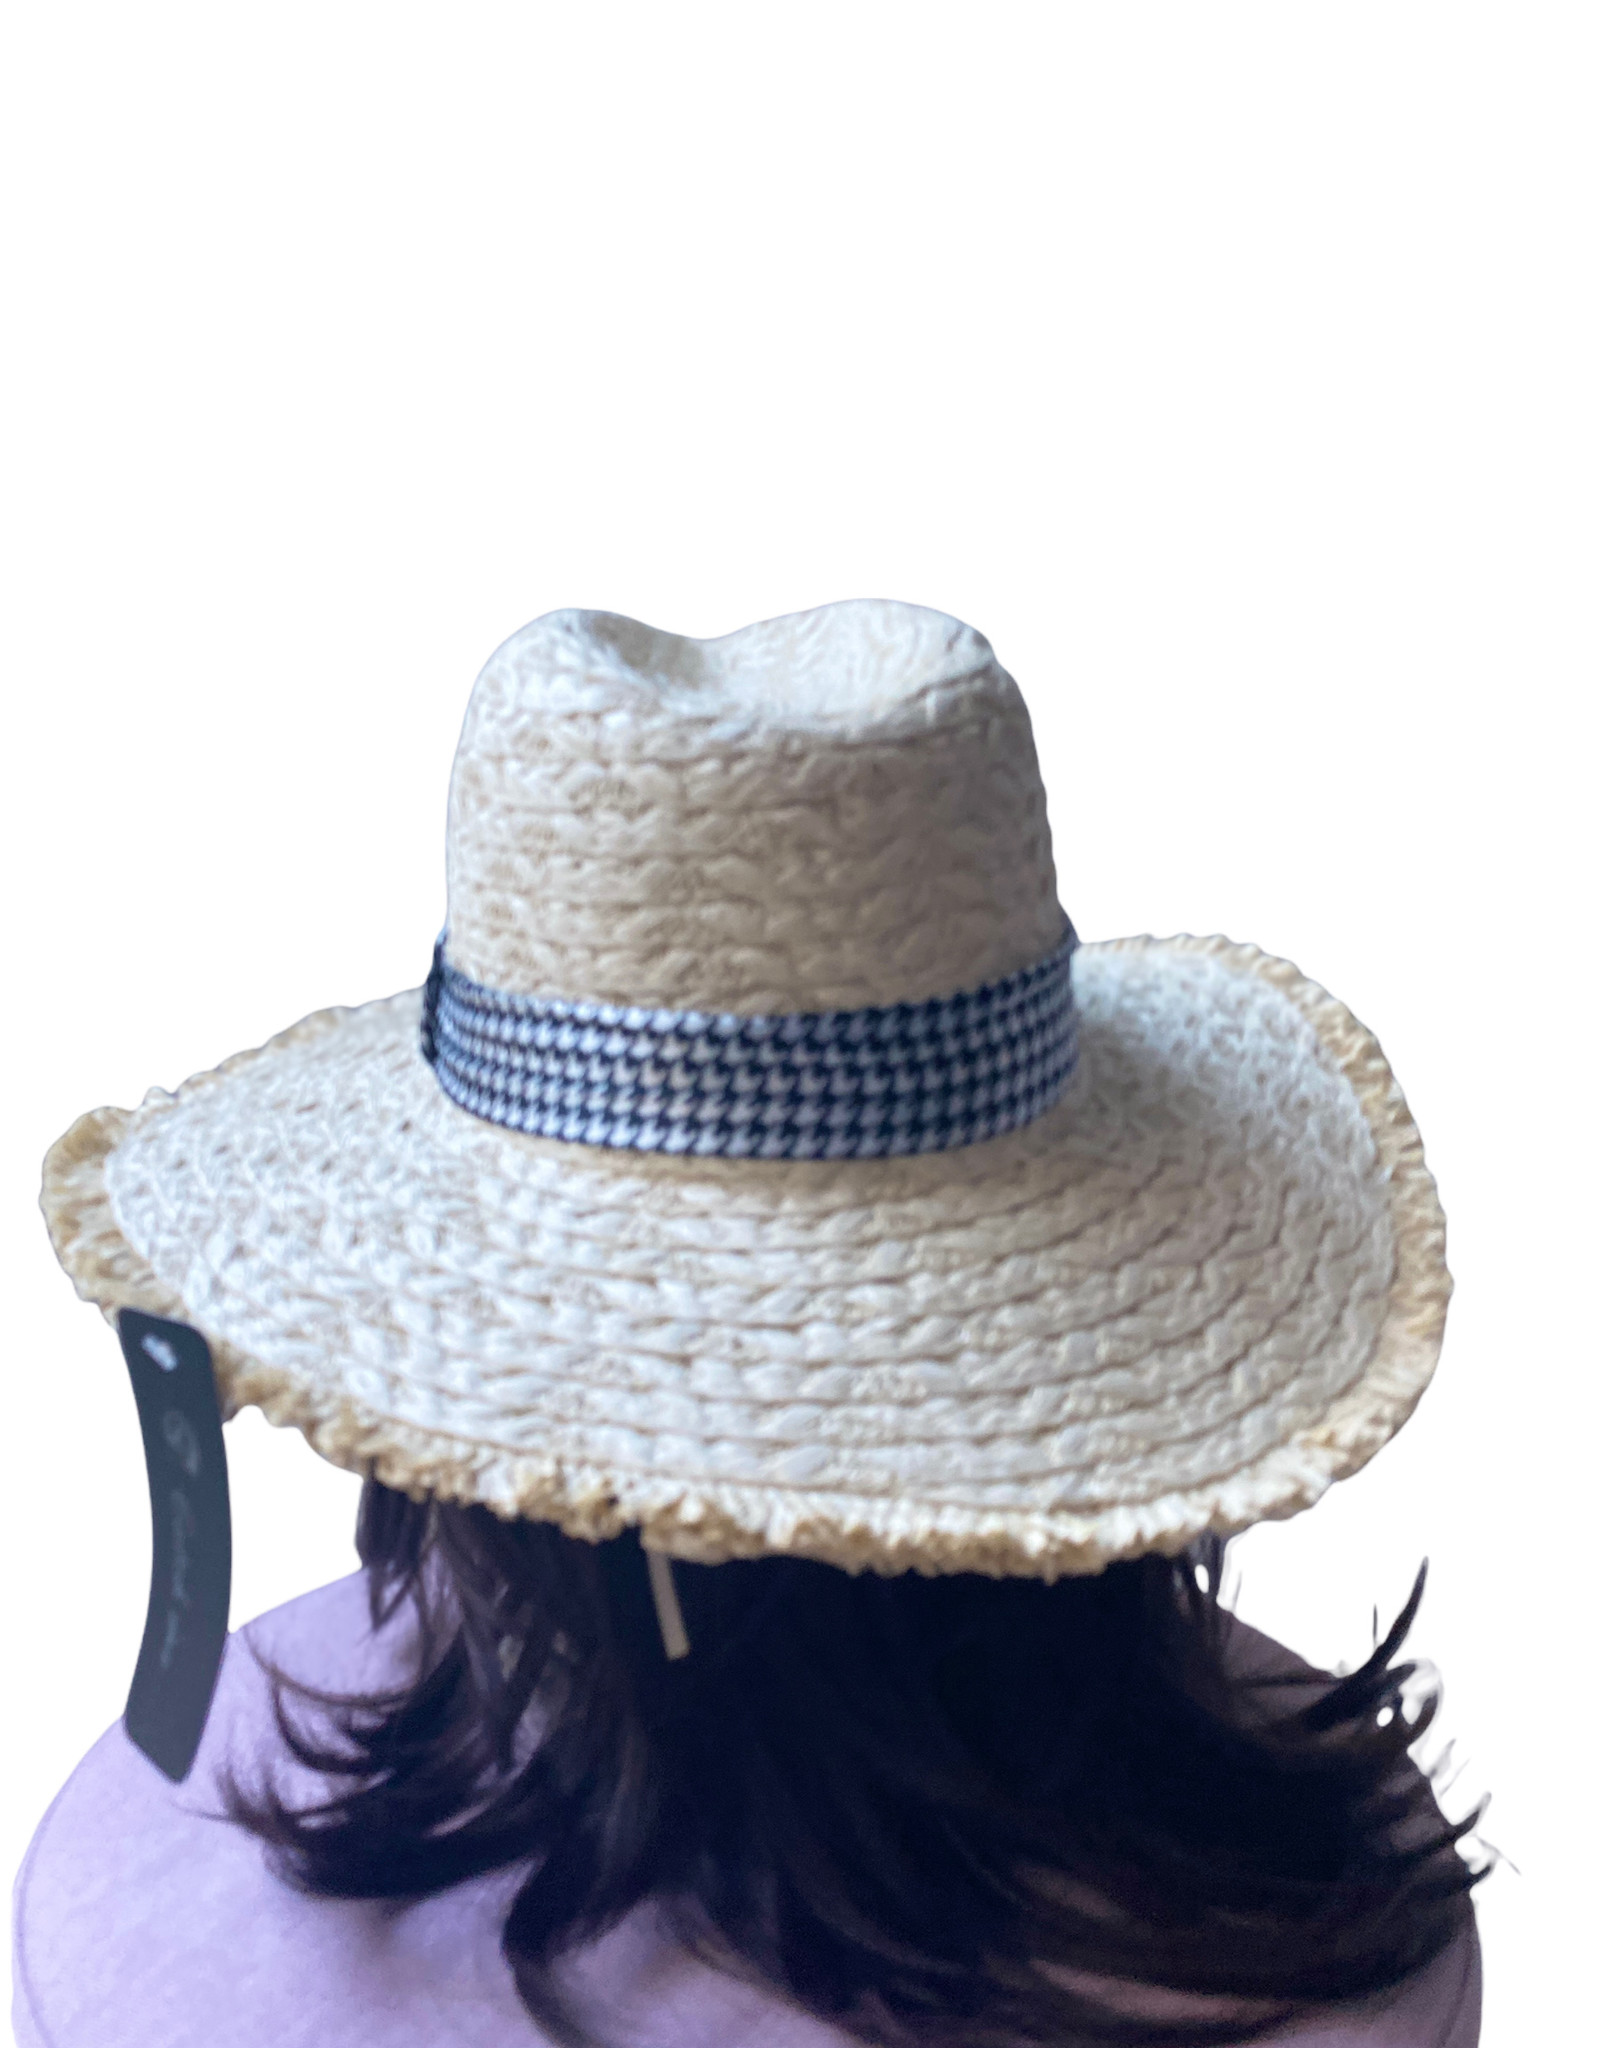 Coarse braided wicker hat with houndstooth ribbon around